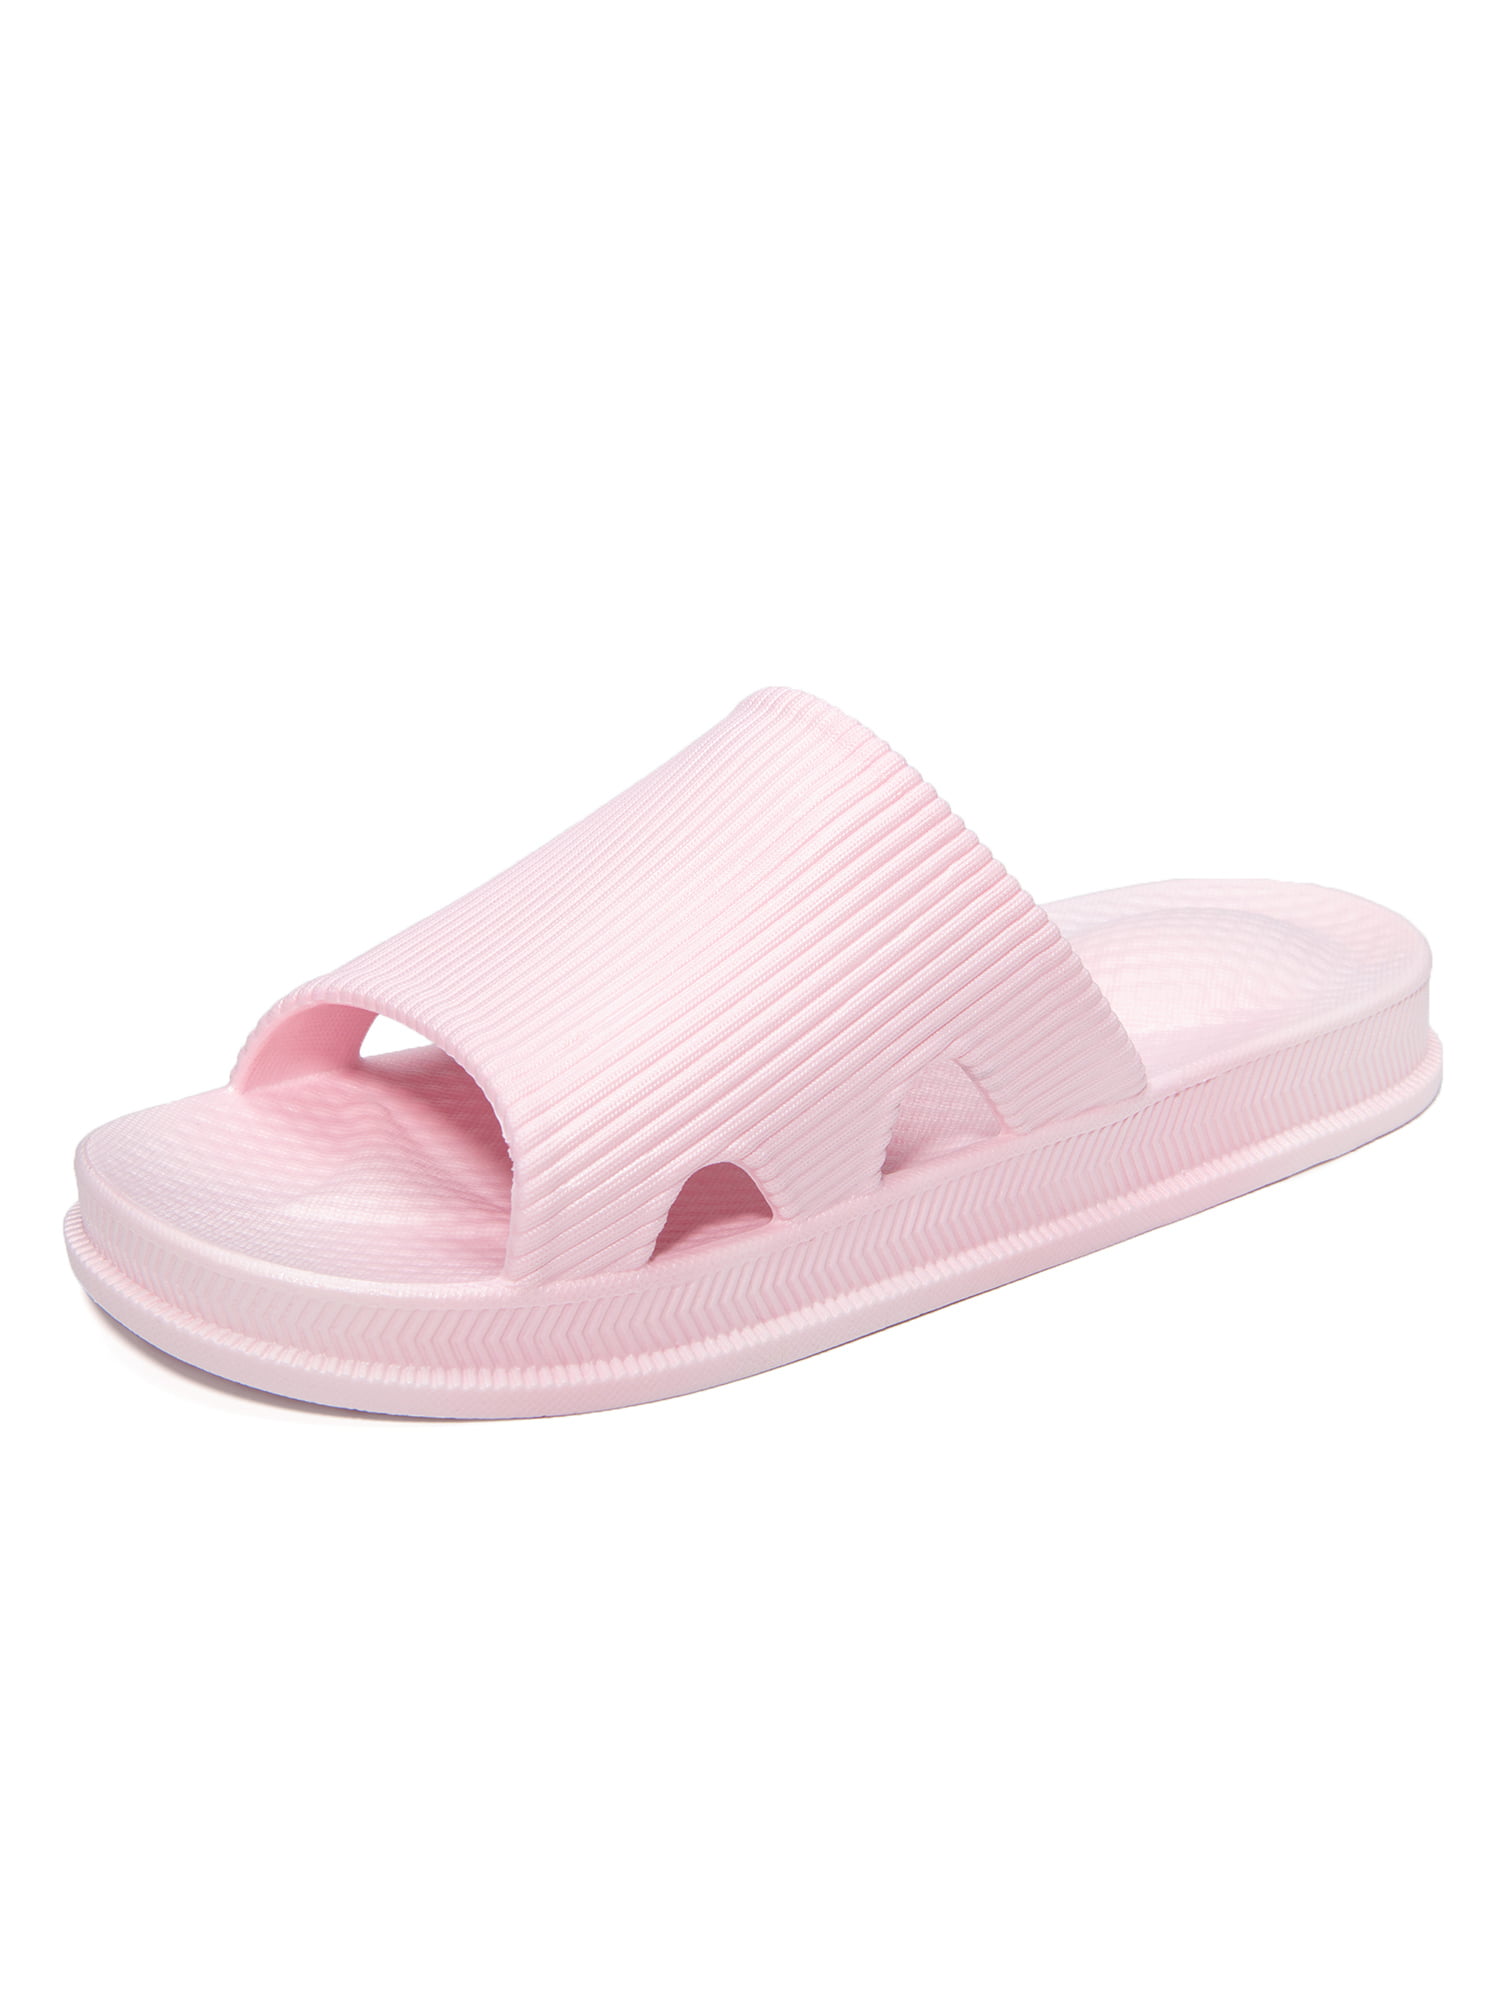 FLORATA Shower Slippers for Women Non-Slip Shower Sandals Beach Water ...